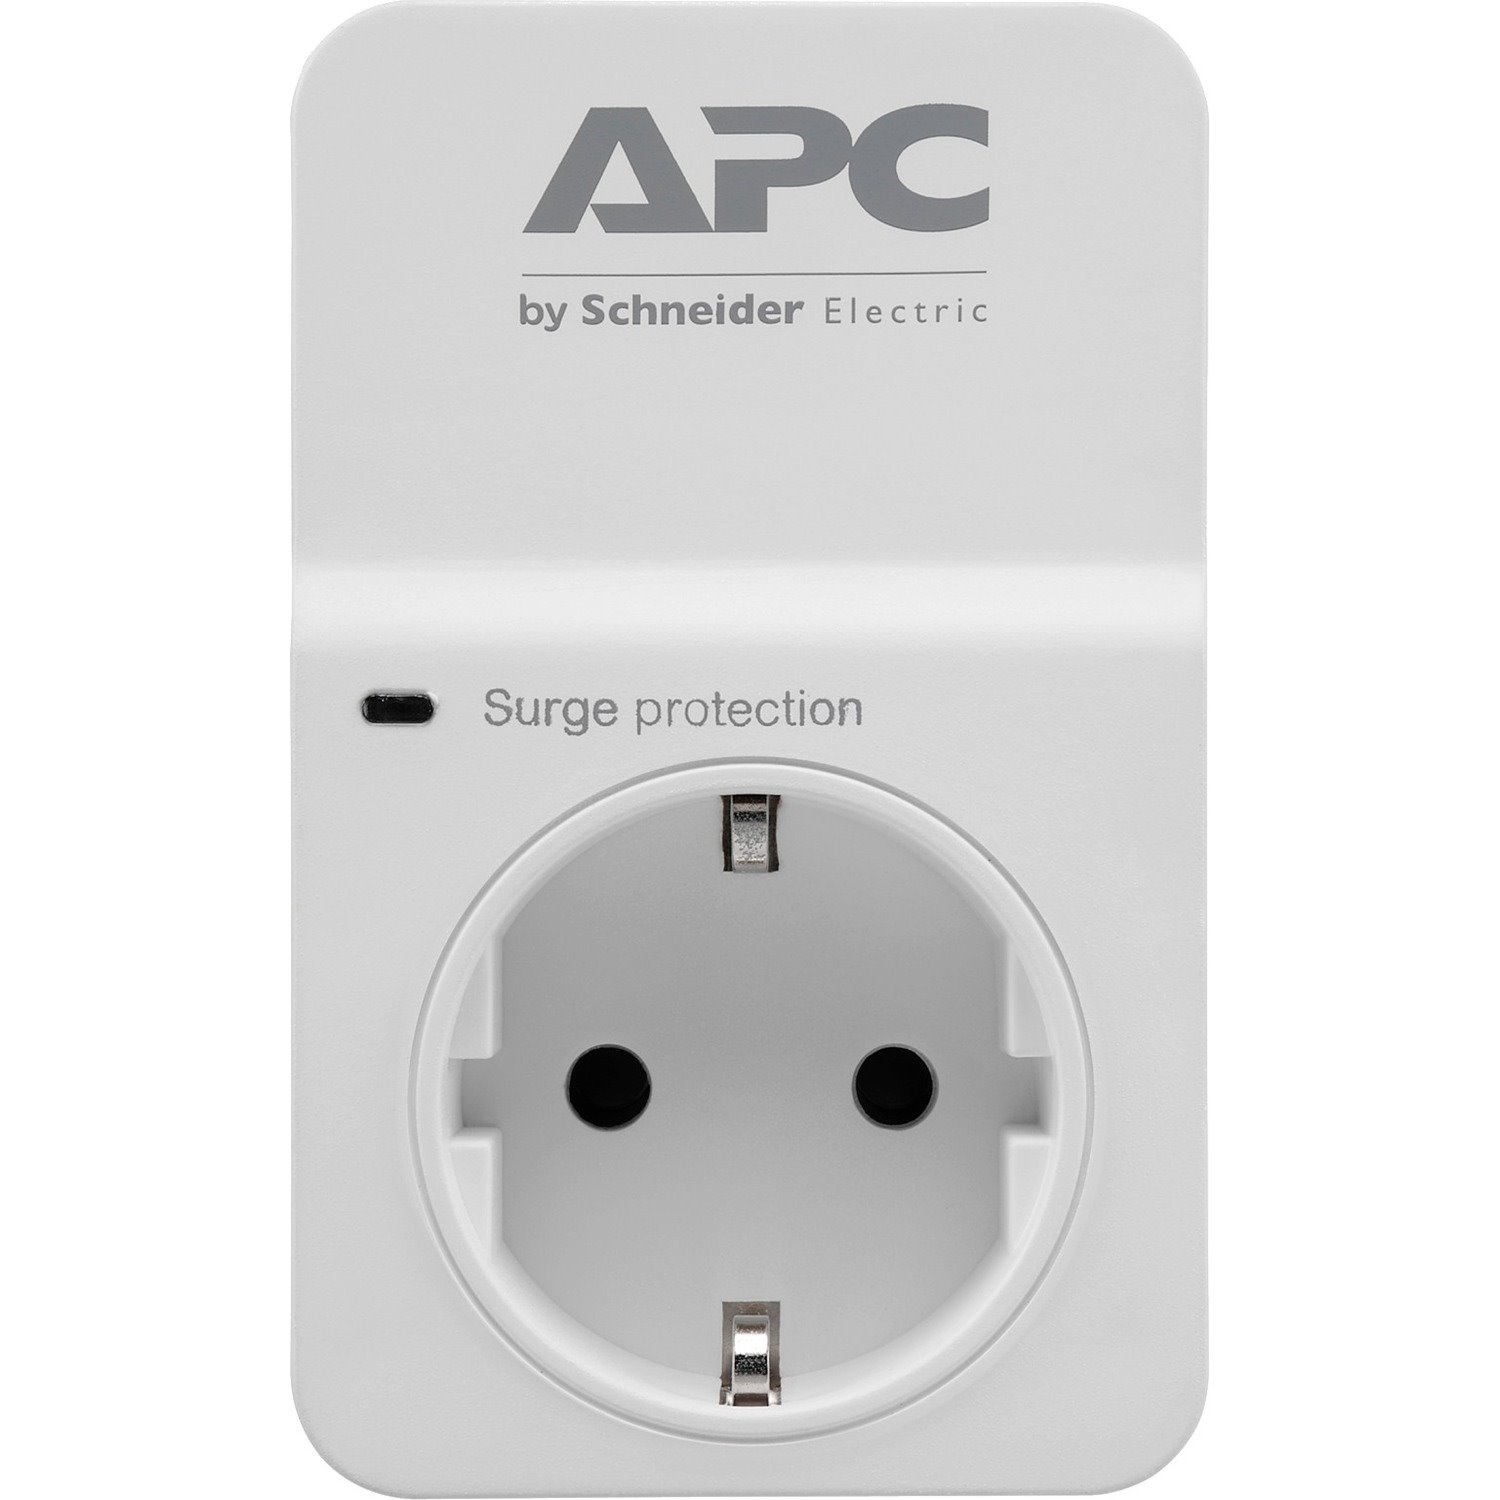 APC by Schneider Electric SurgeArrest Essential PM1W-GR Surge Suppressor/Protector